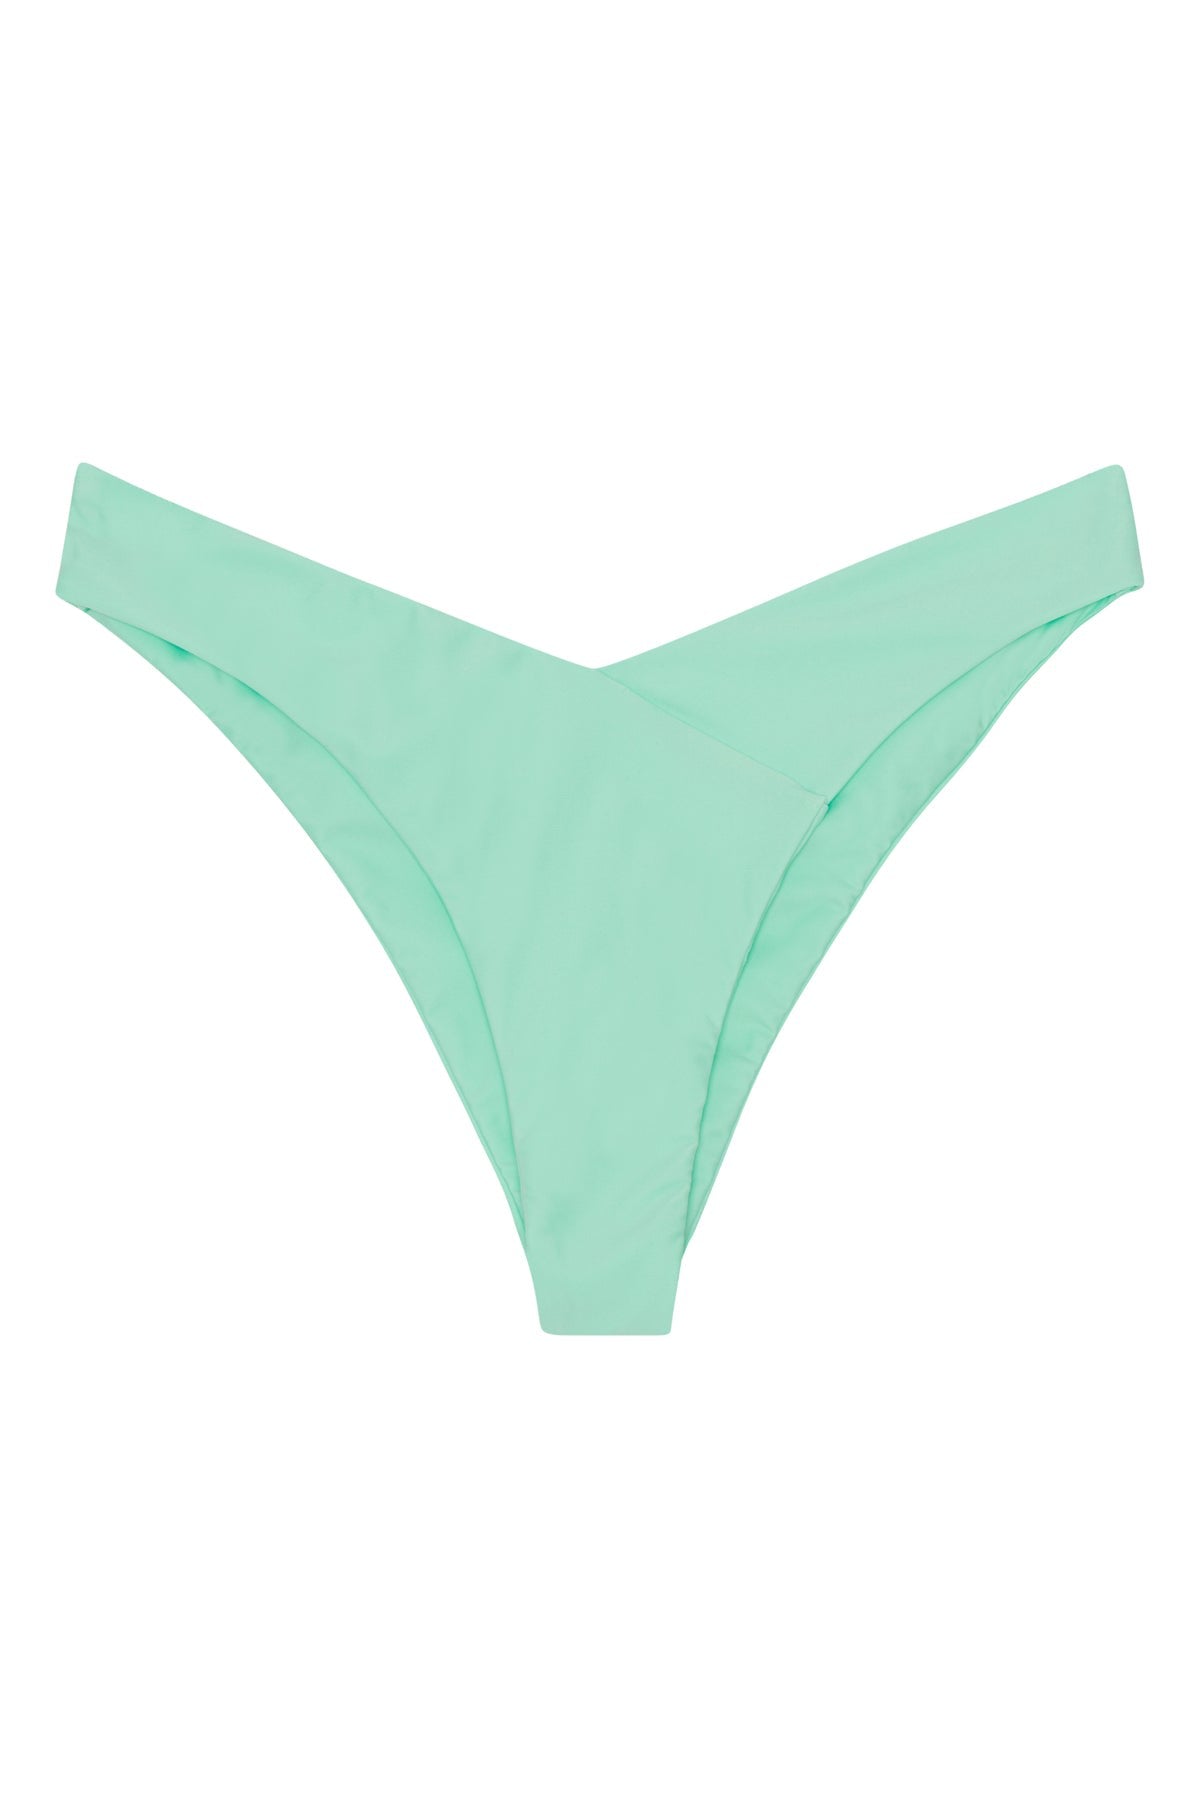 Canggu V-shaped bikini bottom - Mint